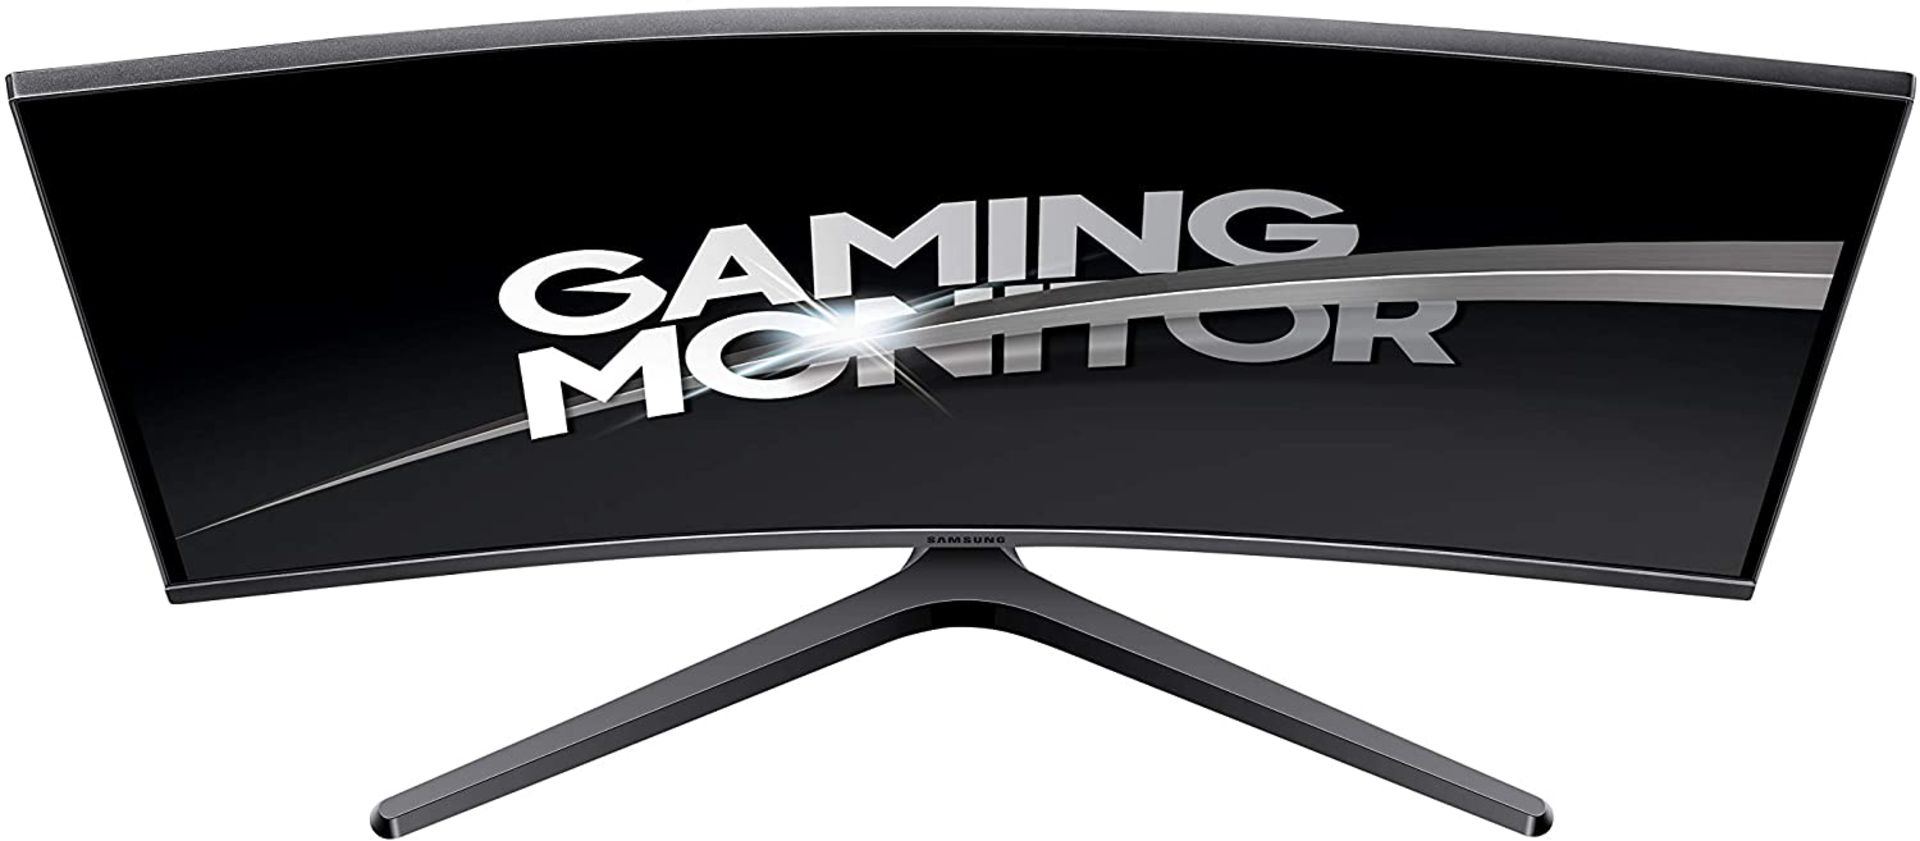 Samsung 27" Curved Gaming Monitor - WQHD 2560x1440, 144Hz, 2x HDMI, DisplayPort - Image 4 of 6